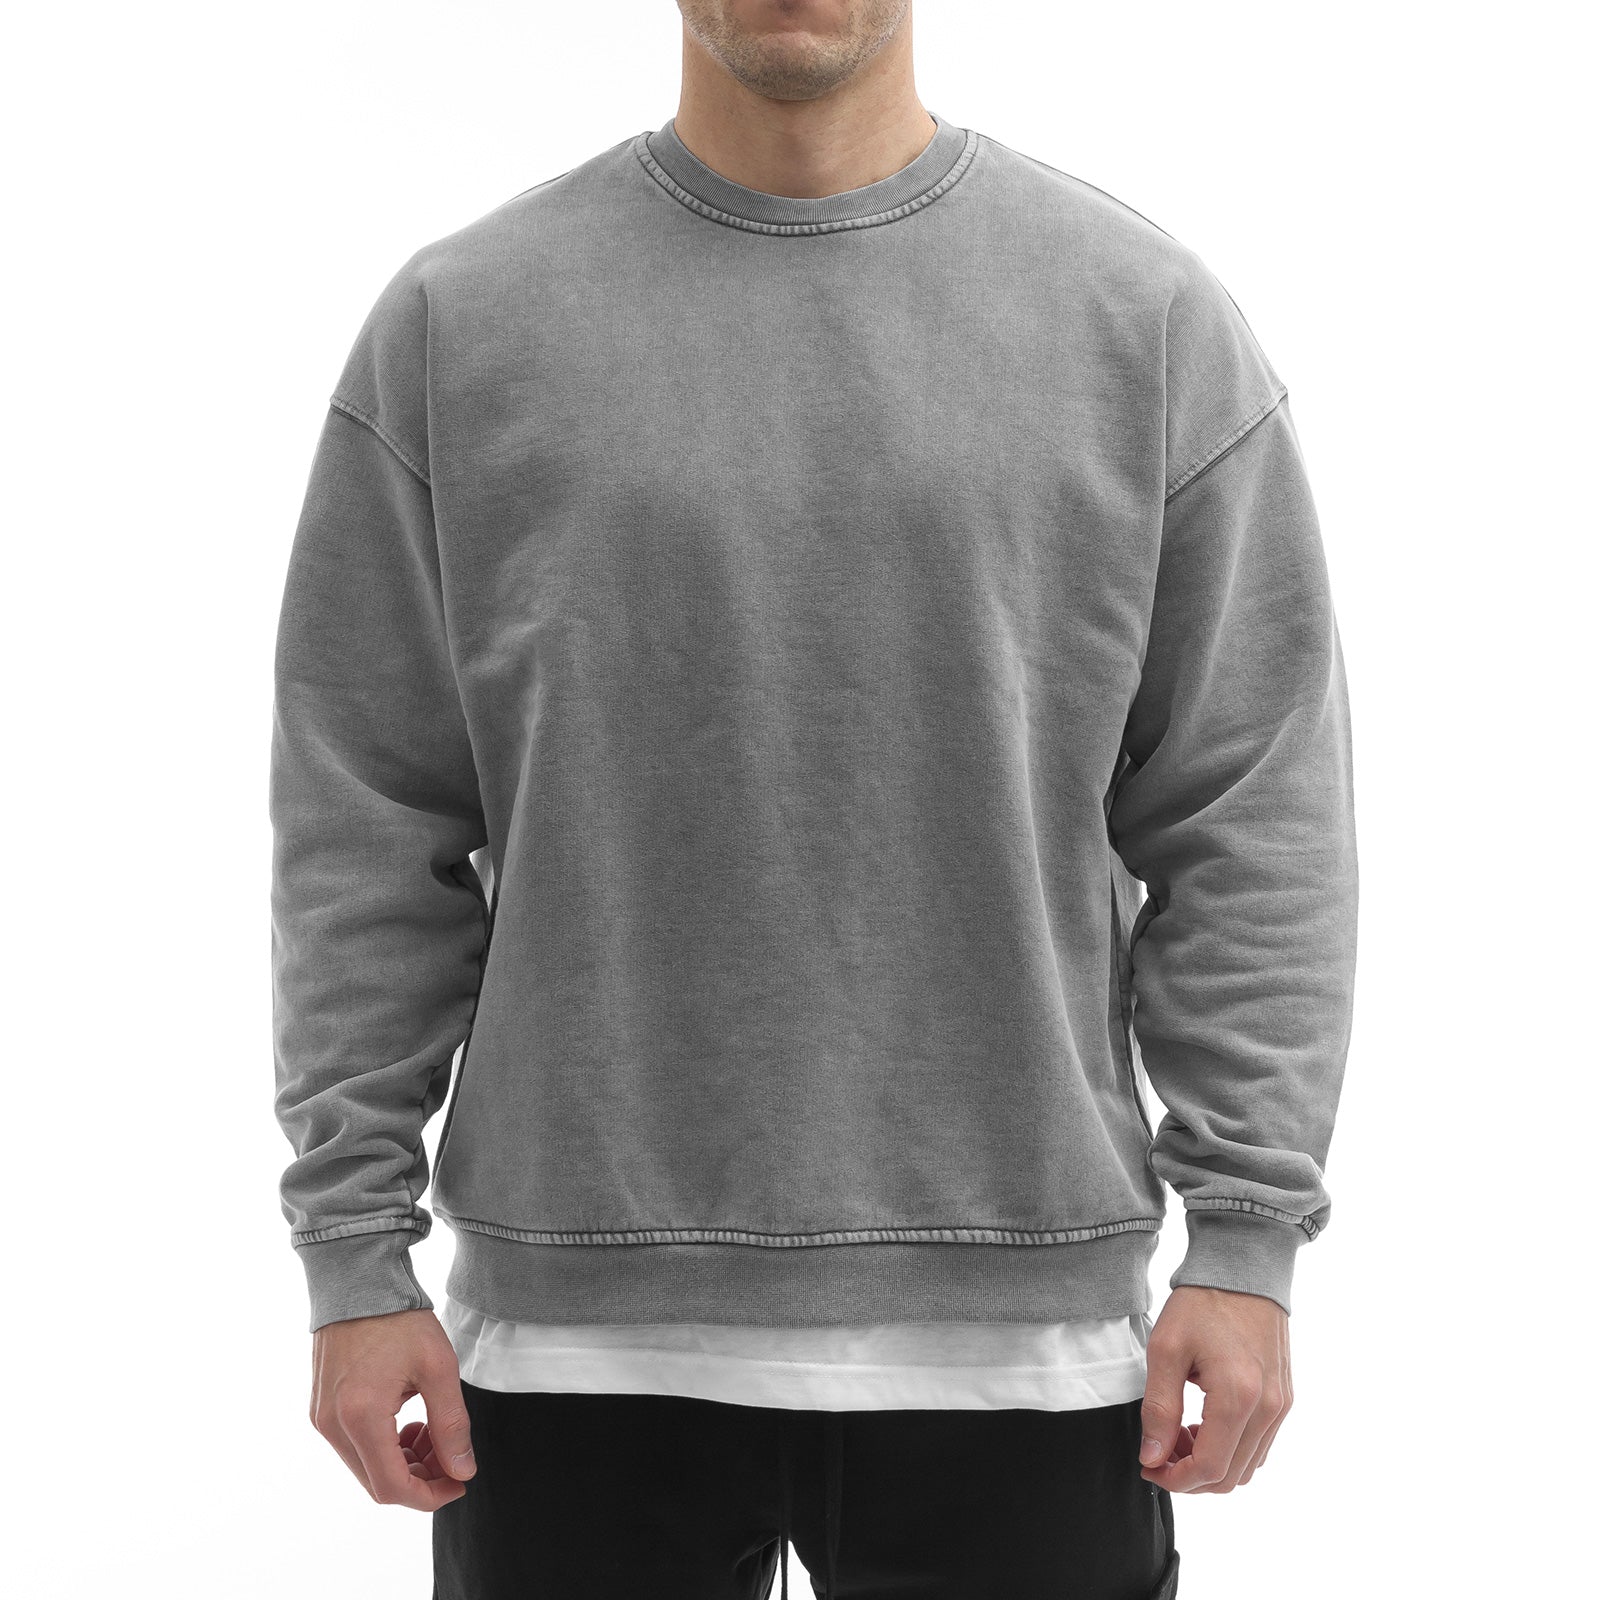 Heavy Oversize Sweatshirt - washed grey